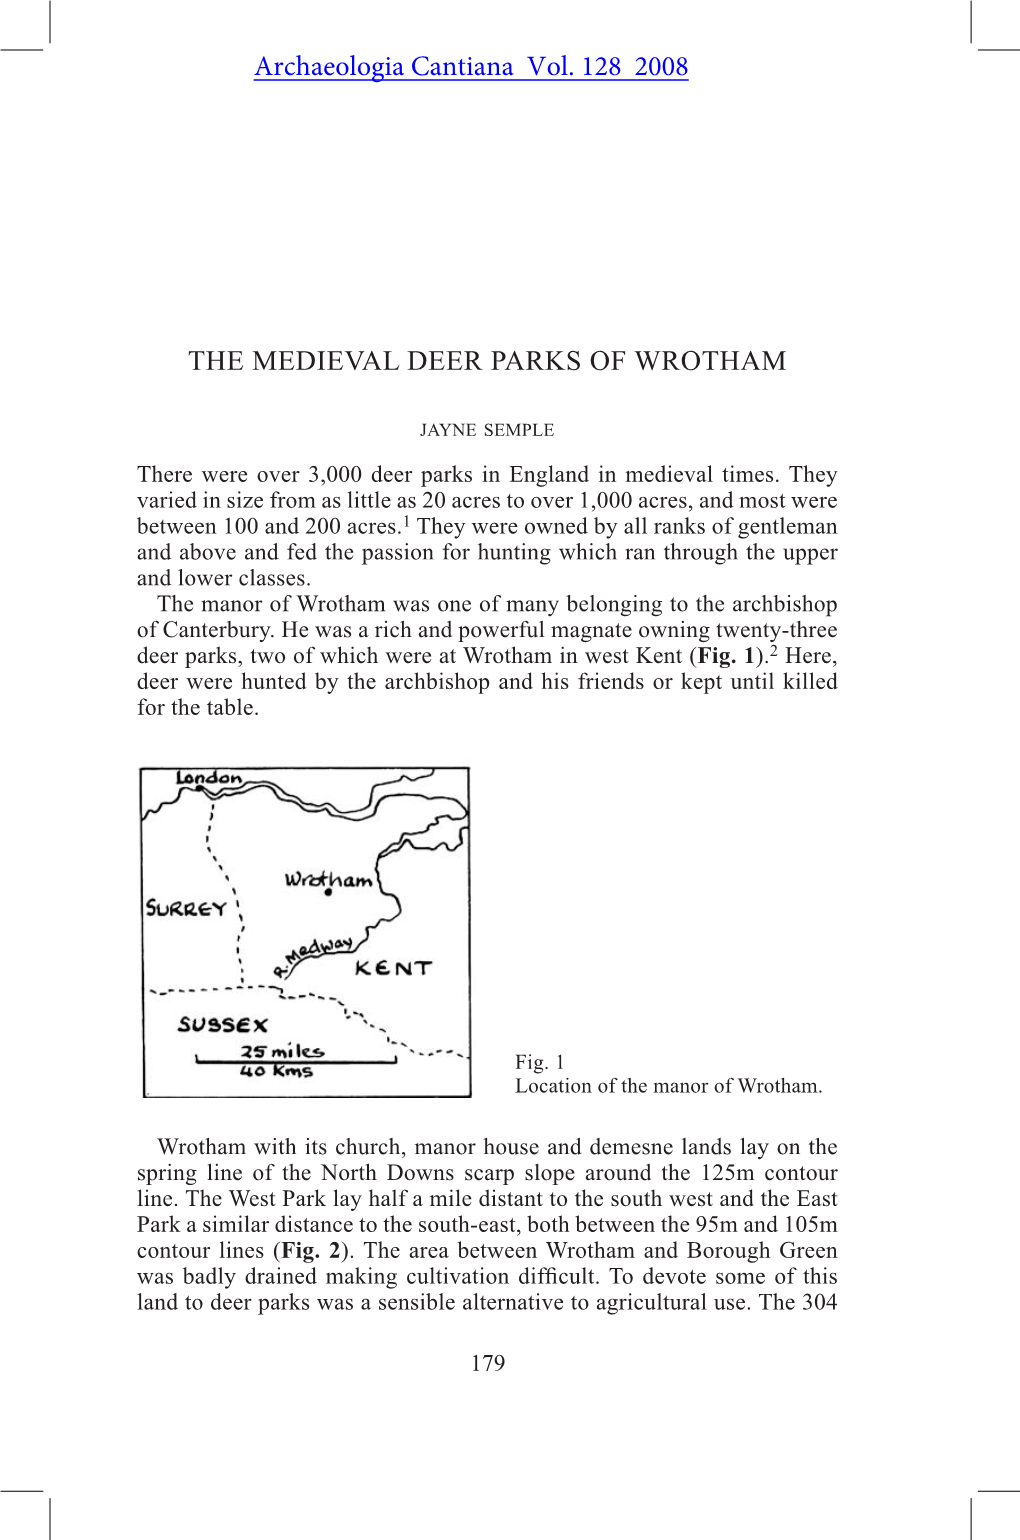 The Medieval Deer Parks of Wrotham